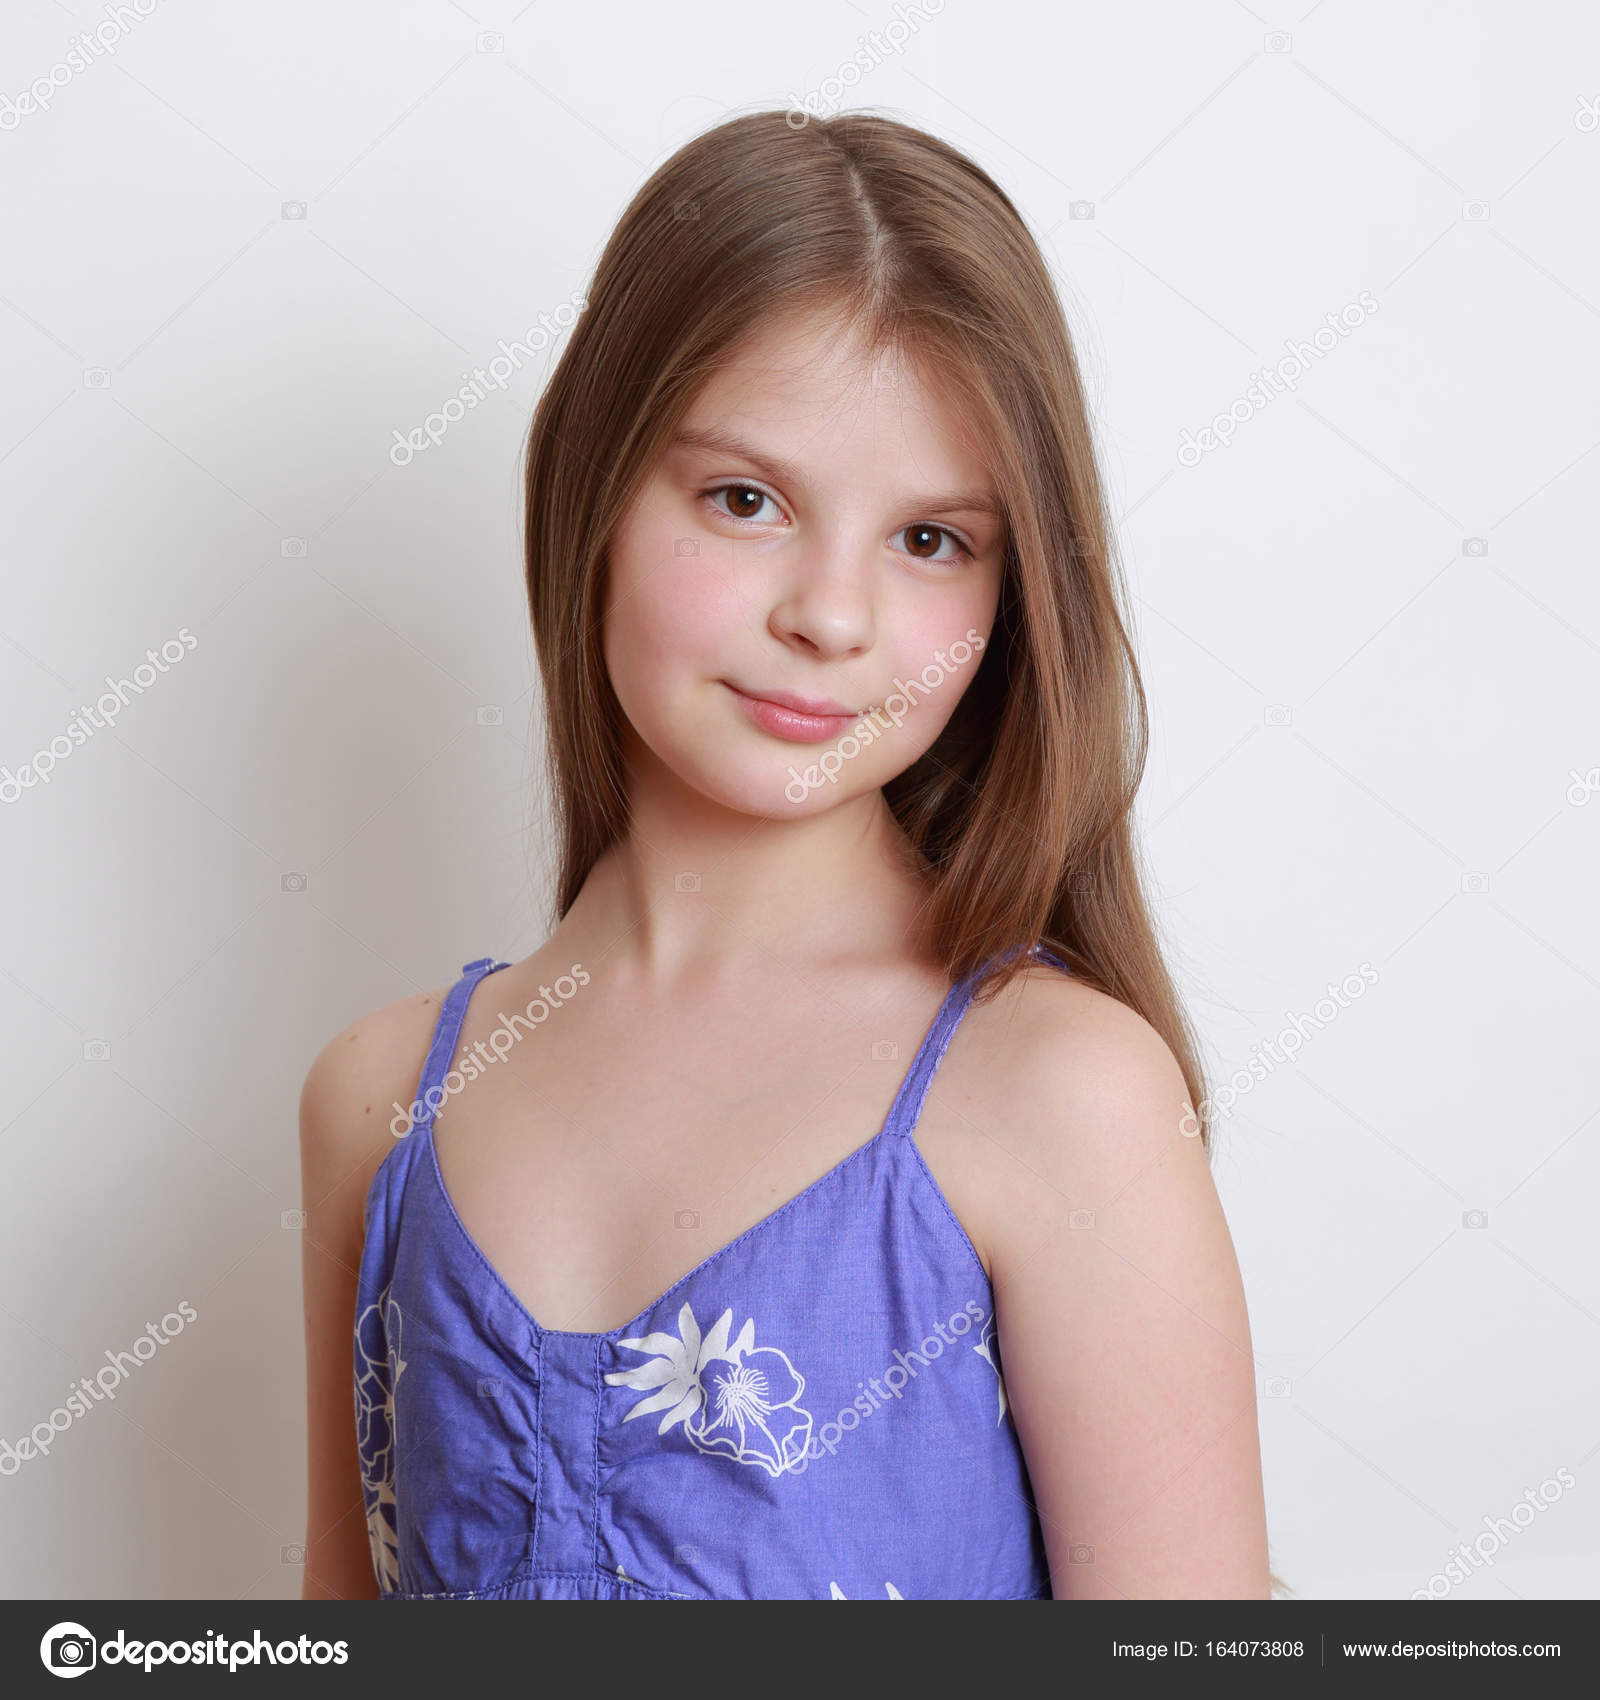 Teen Girl Portrait stock photo. Image of teen, classic - 32388658